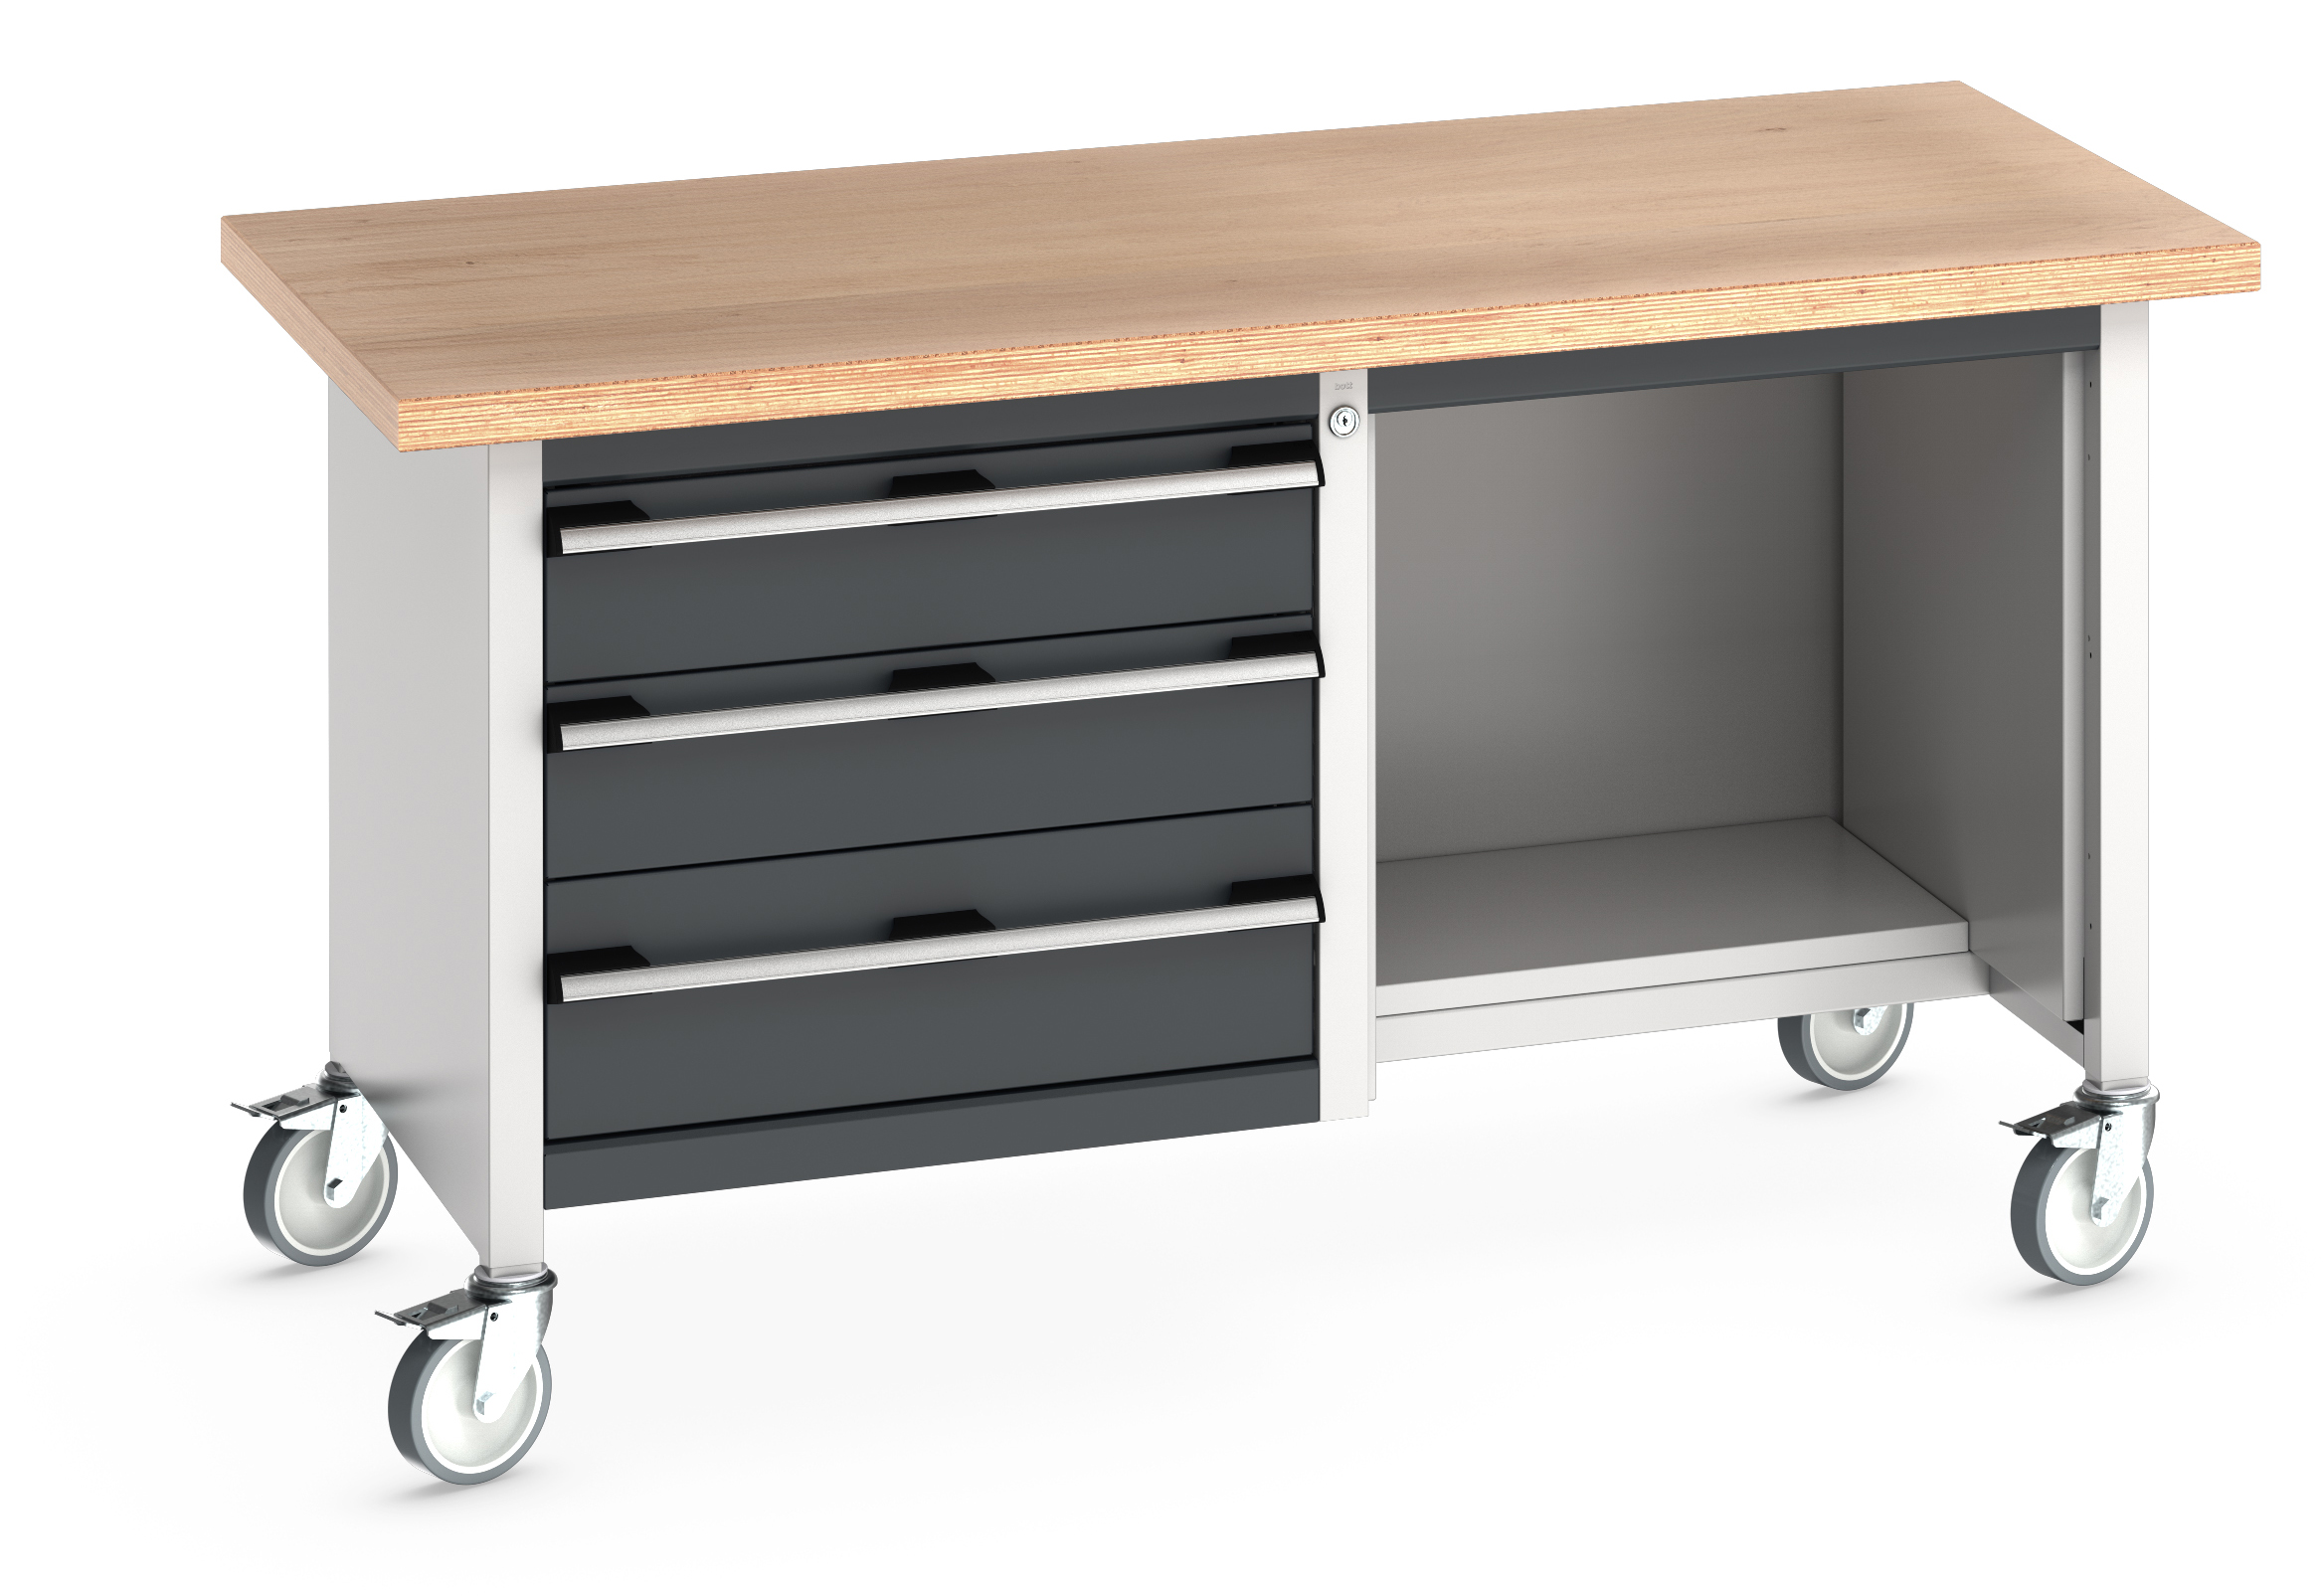 Bott Cubio Mobile Storage Bench With 3 Drawer Cabinet / Open With Half Depth Base Shelf - 41002115.19V